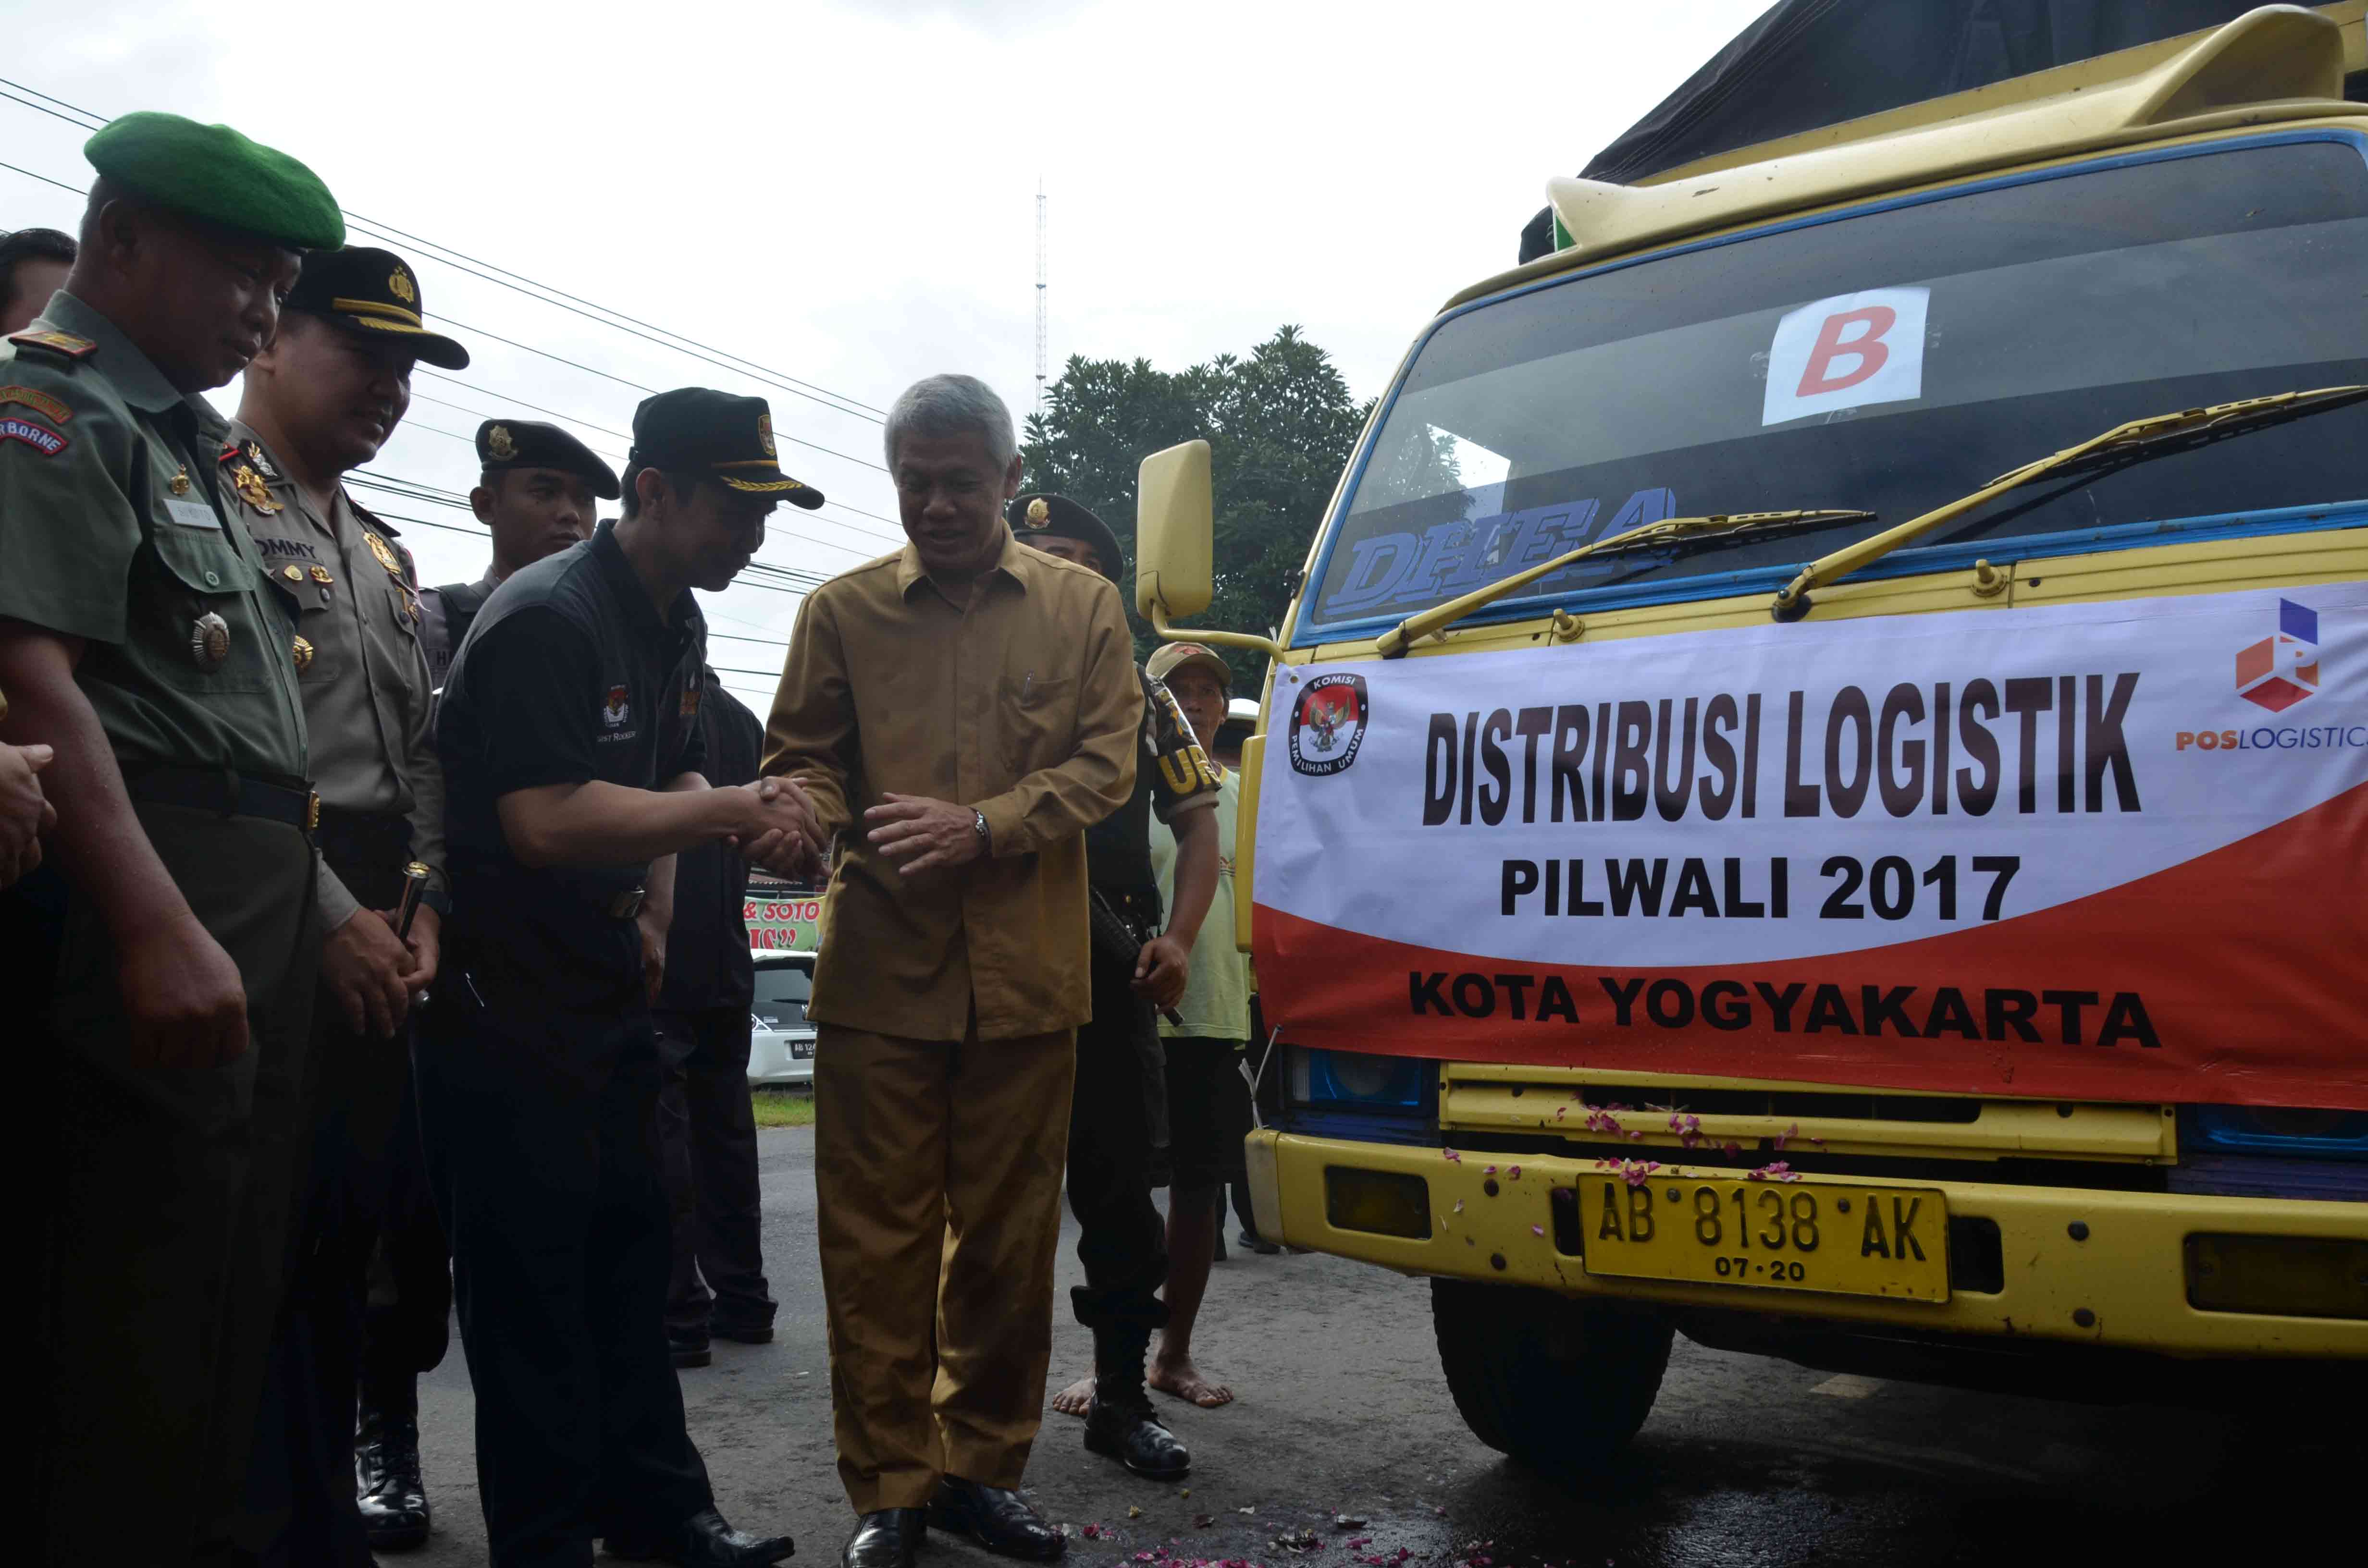 KPU Kota Yogya Launching Distribusi Logistik Pilwali 2017